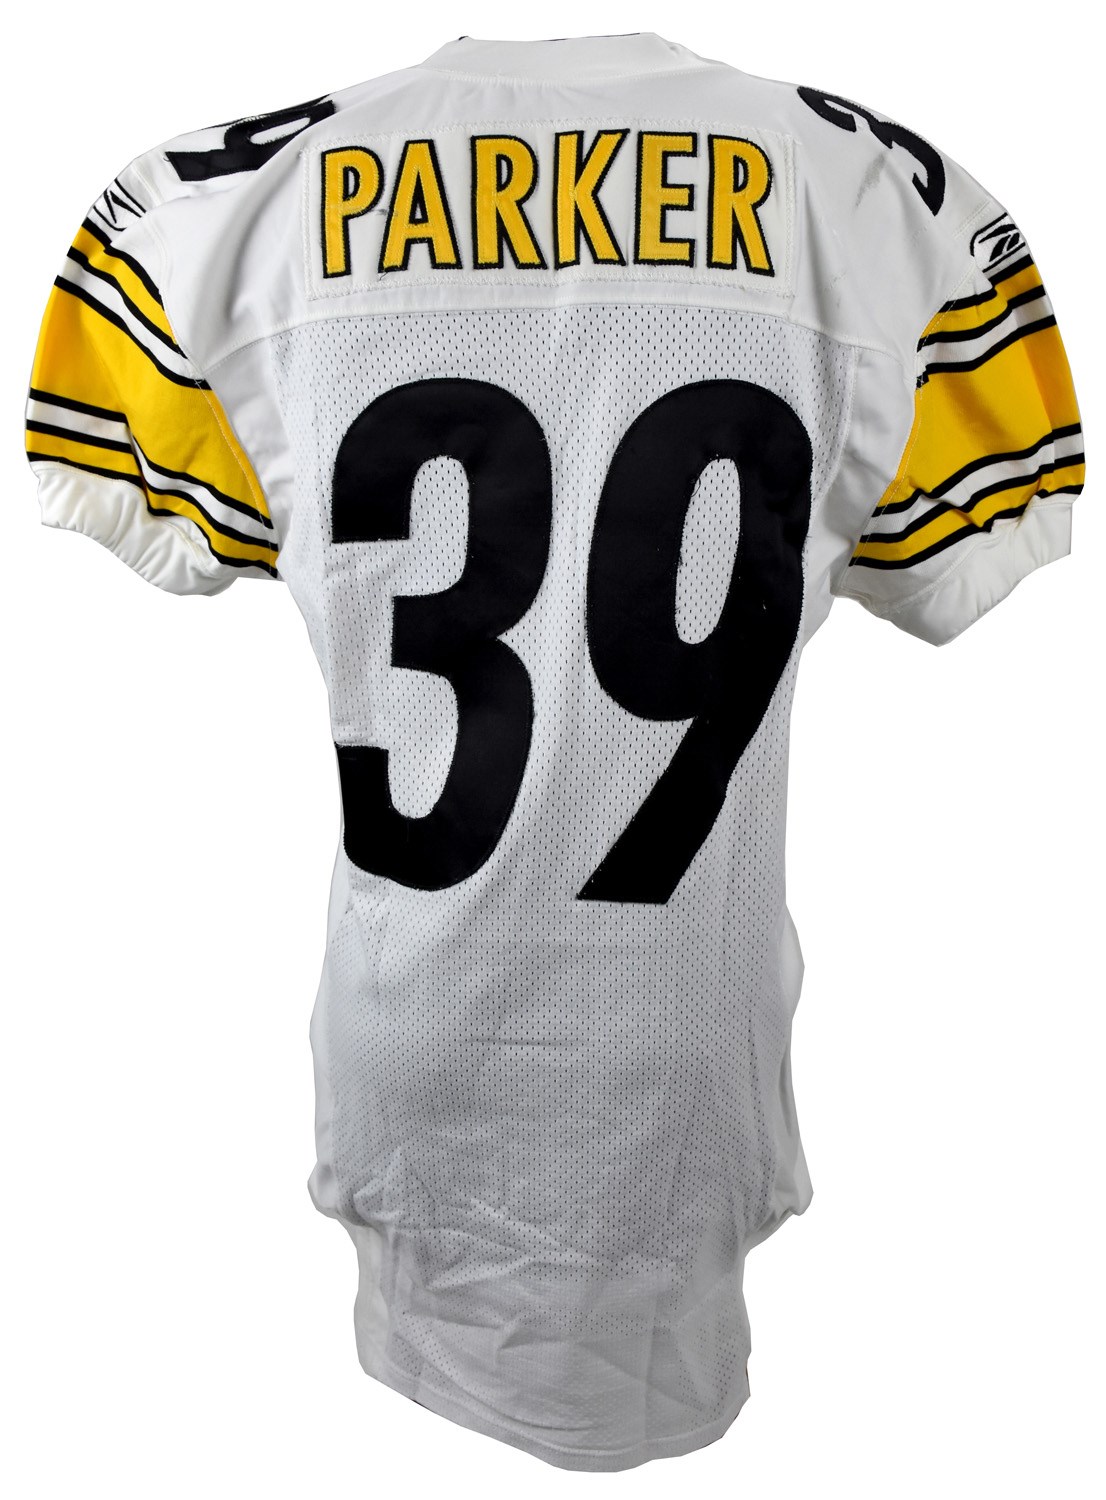 - 2004 Willie Parker Pittsburgh Steelers Game Worn Rookie Year Jersey